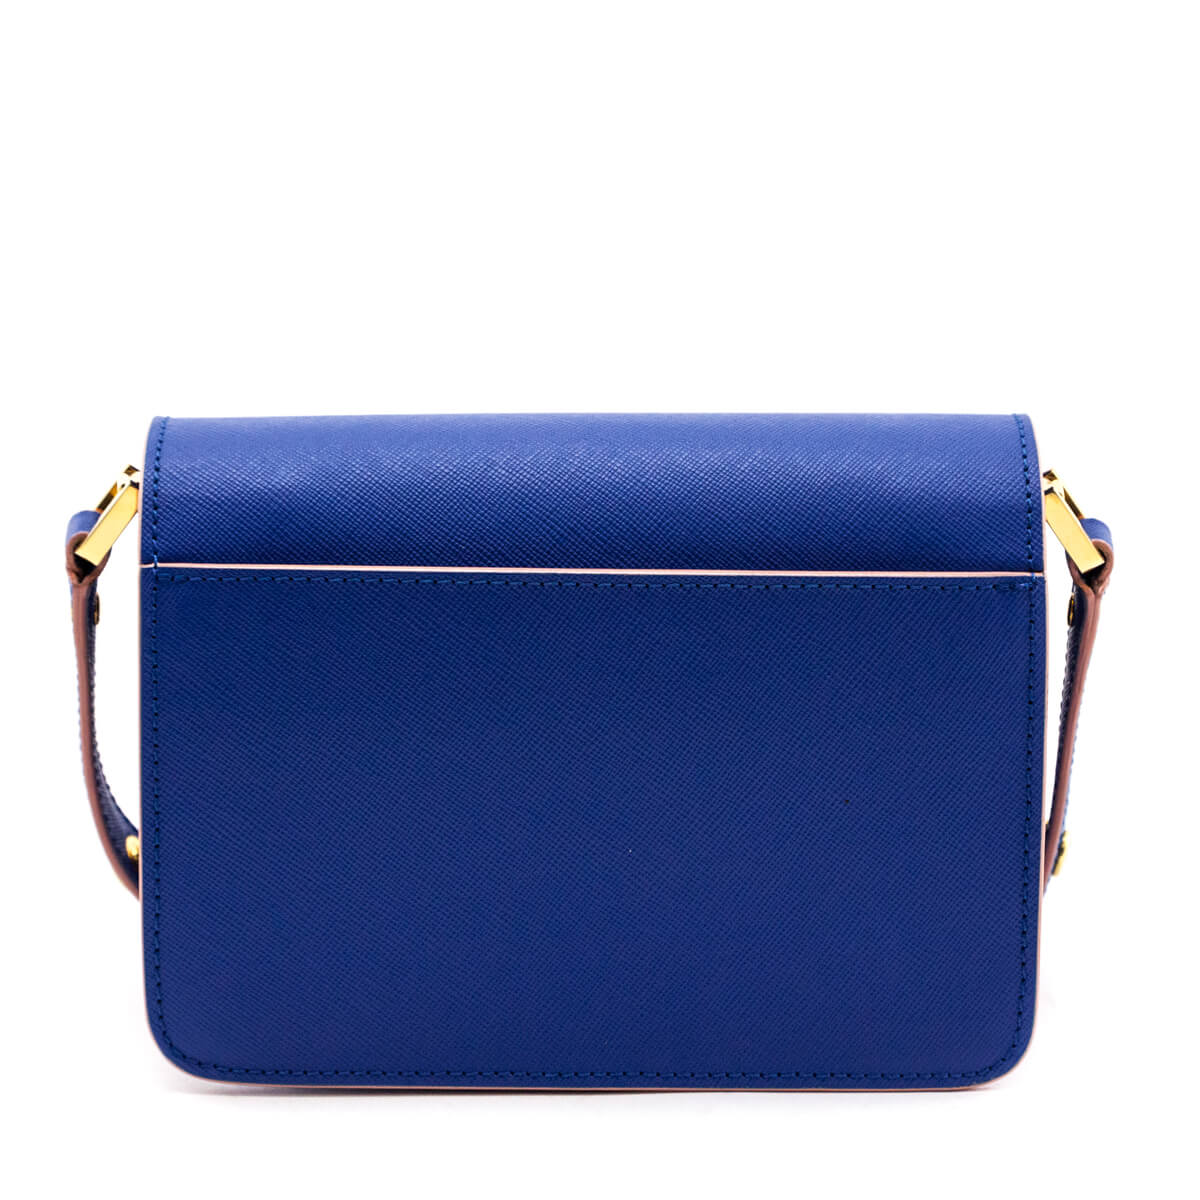 Marni Blue Saffiano Mini Trunk Bag - Love that Bag etc - Preowned Authentic Designer Handbags & Preloved Fashions